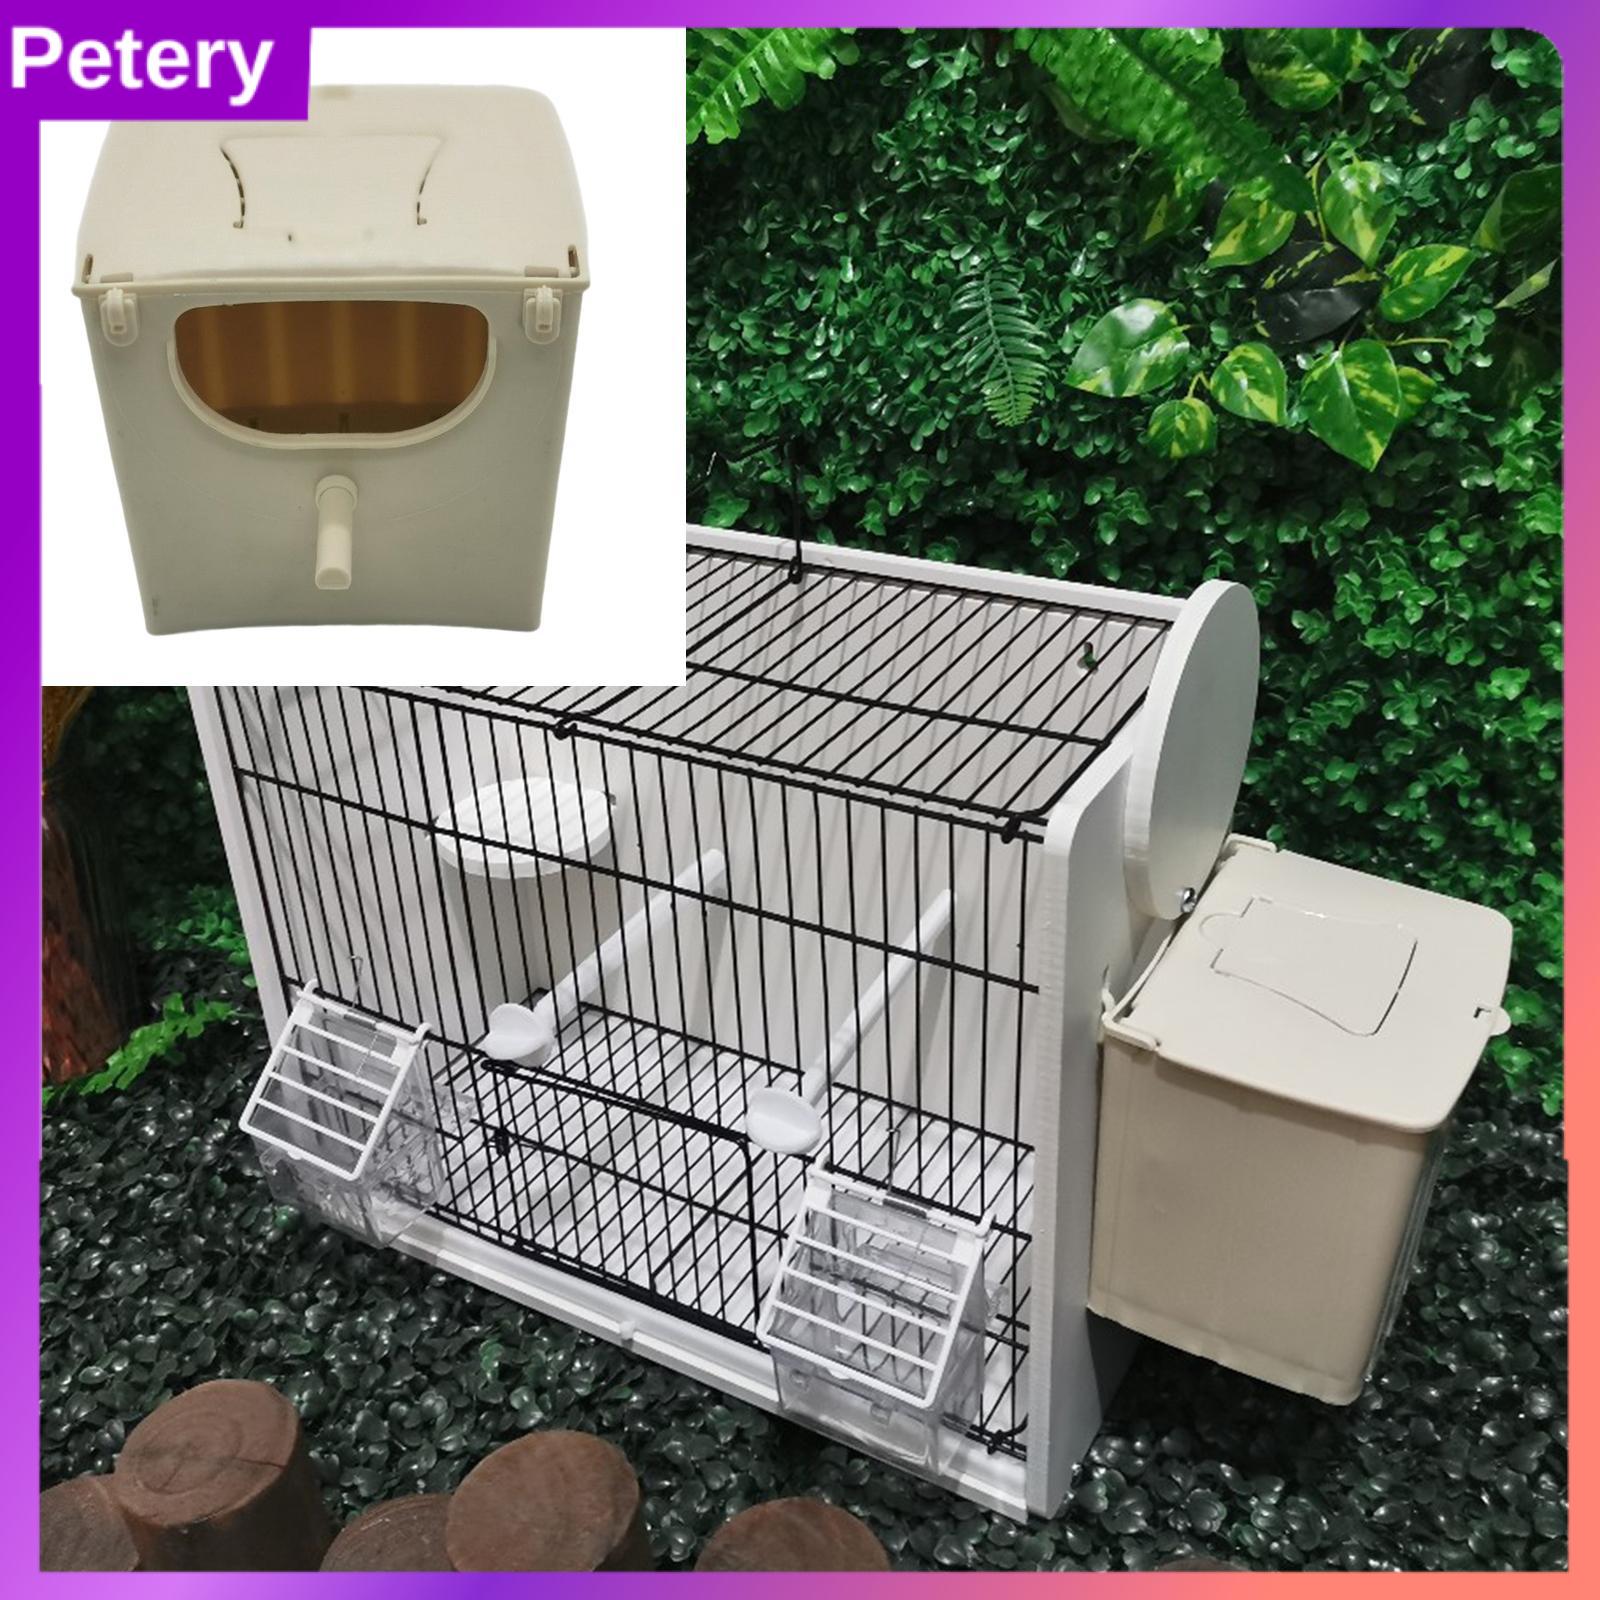 Petery Bird Hut Box Breathable Bird Hut Birdhouses Bird Cage for Parrot